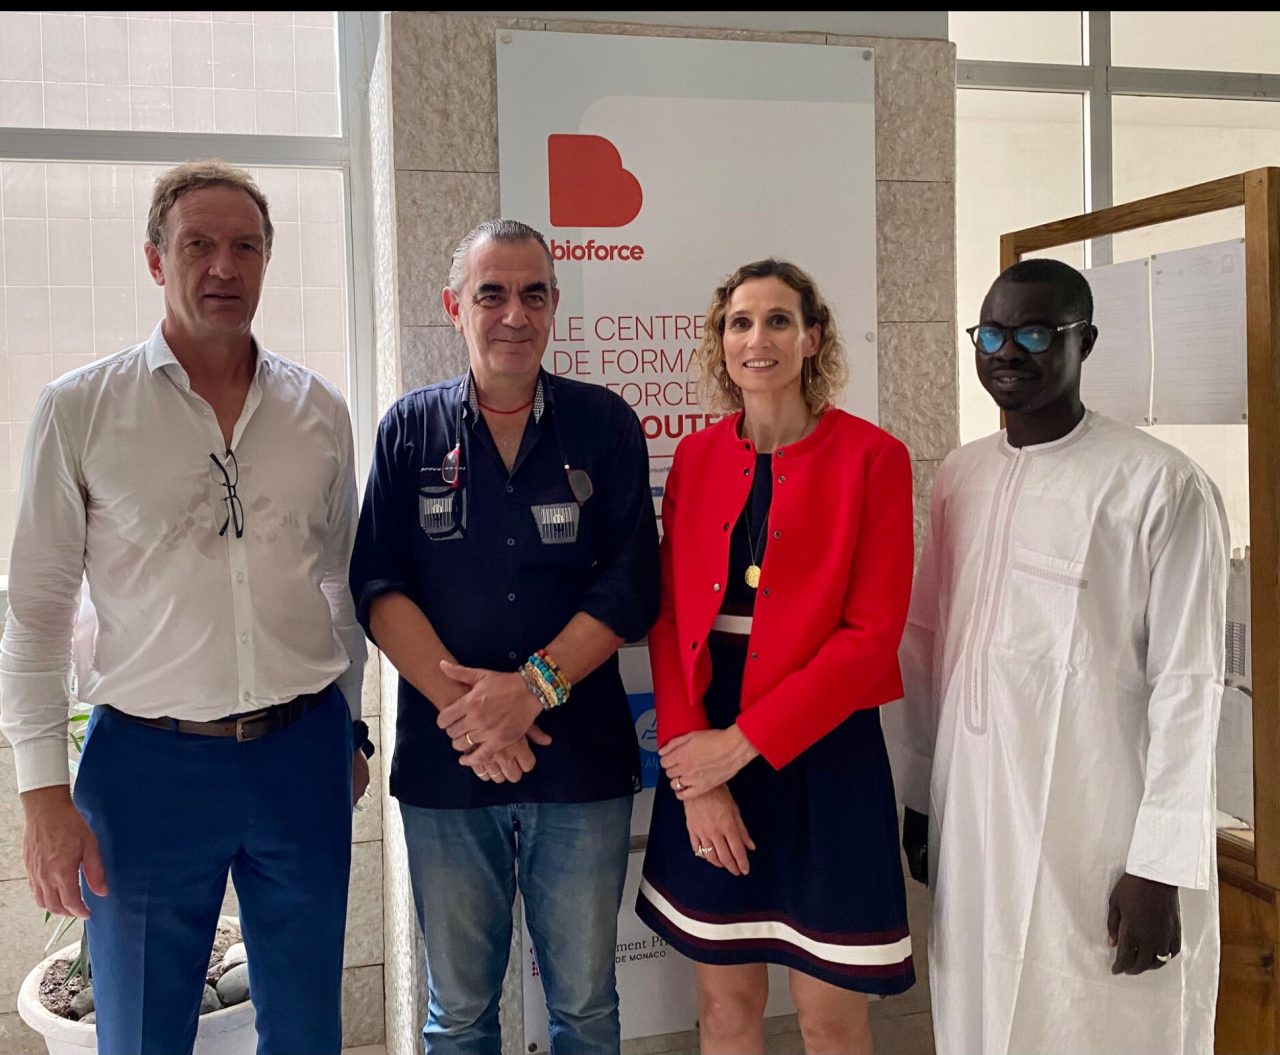 Vanina Laurent-Ledru: I was pleased to visit Bioforce while in Dakar, a leading provider of humanitarian aid training.